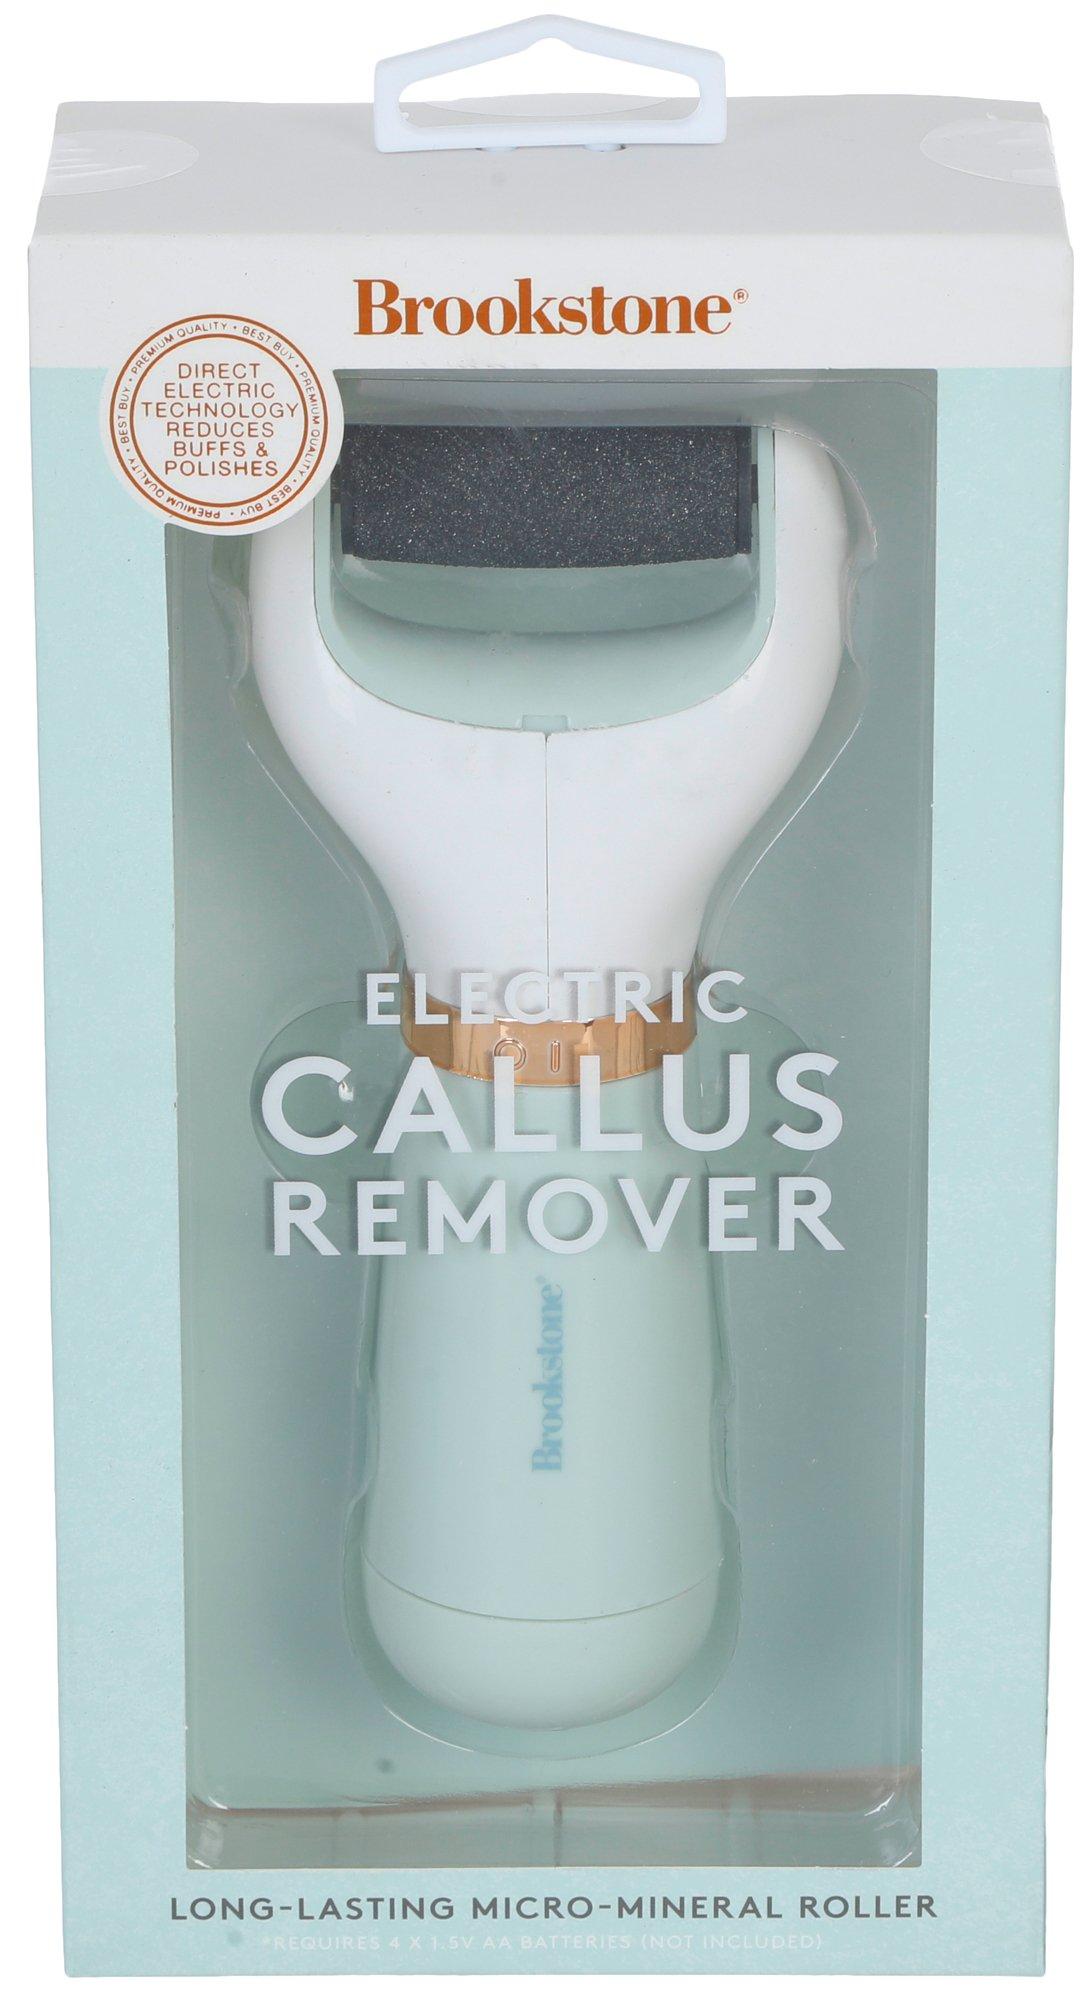 Electric Callus Remover